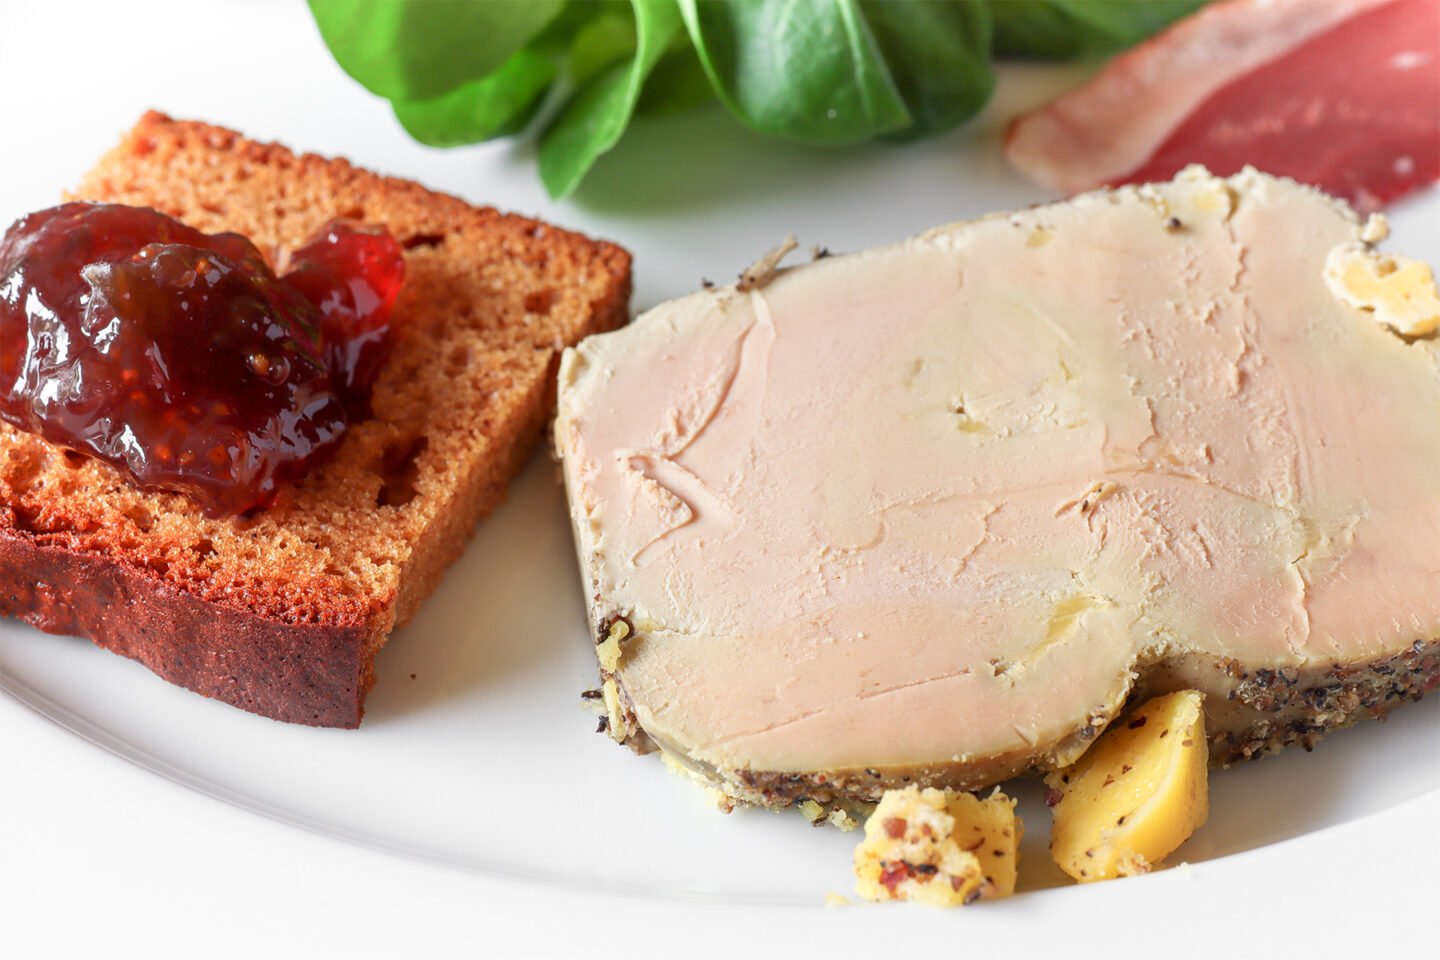 homemade foie gras with jam on bread